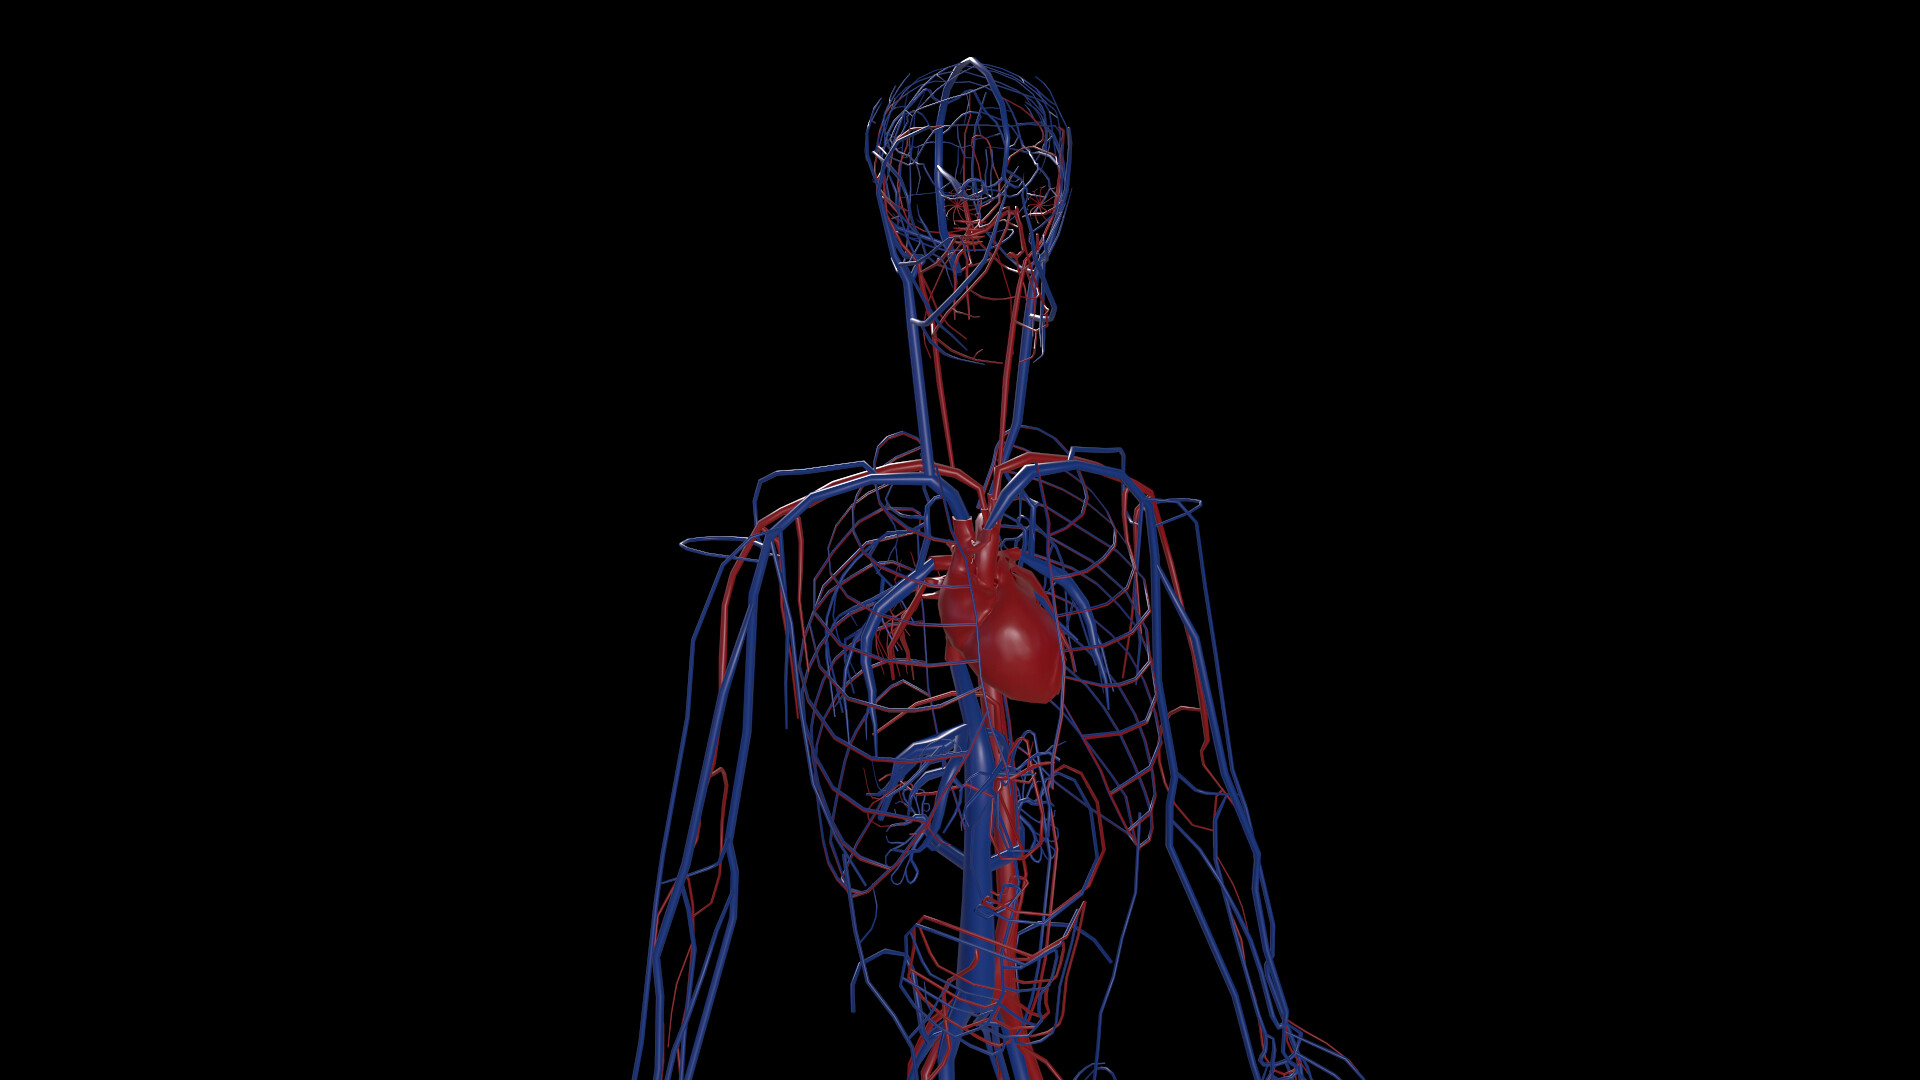 ArtStation - Human circulatory system.